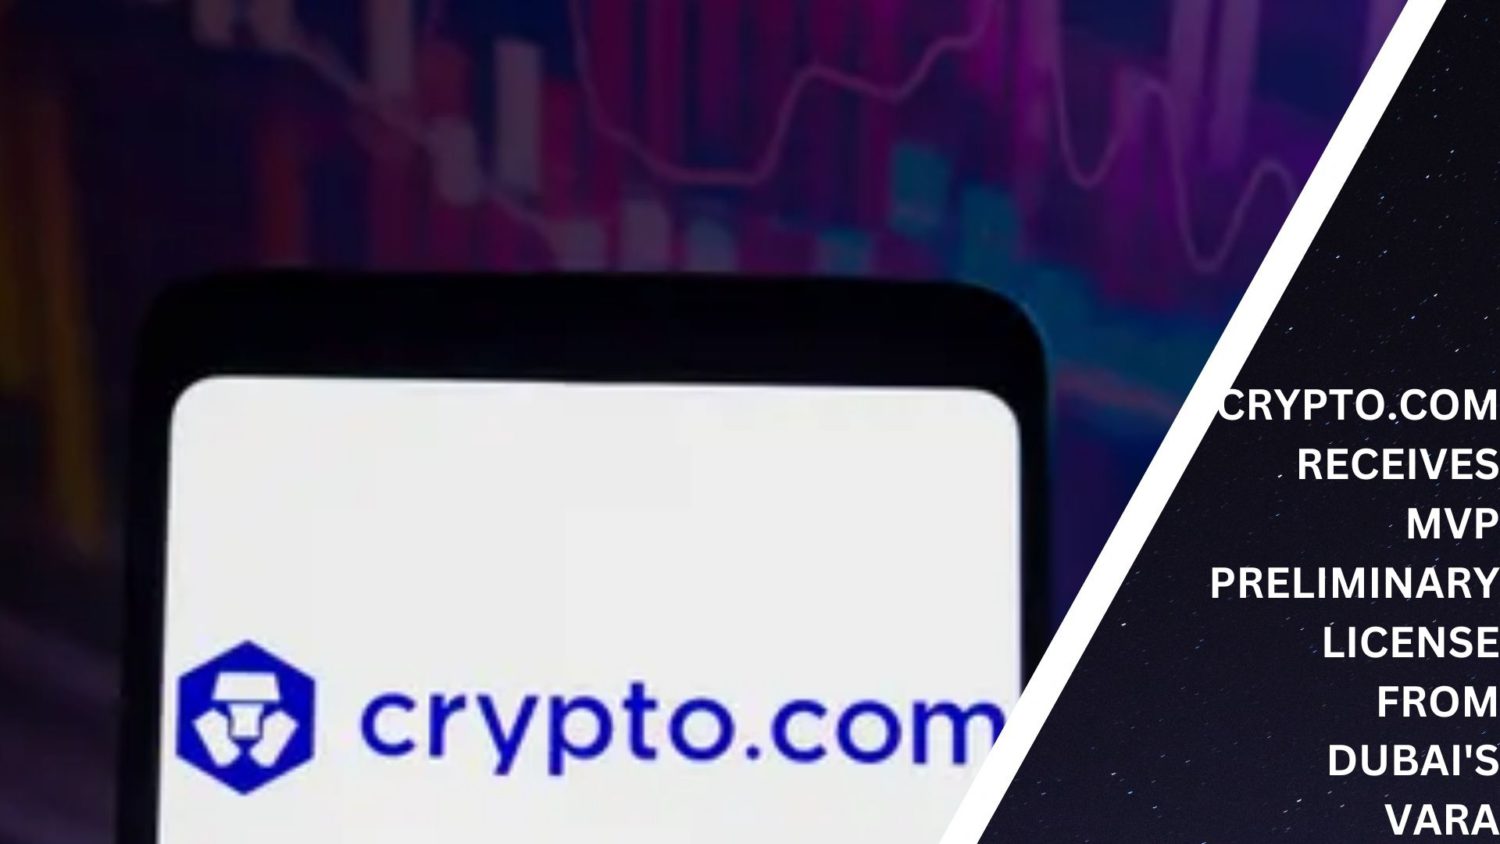 Crypto.com Receives Mvp Preliminary License From Dubai'S Vara